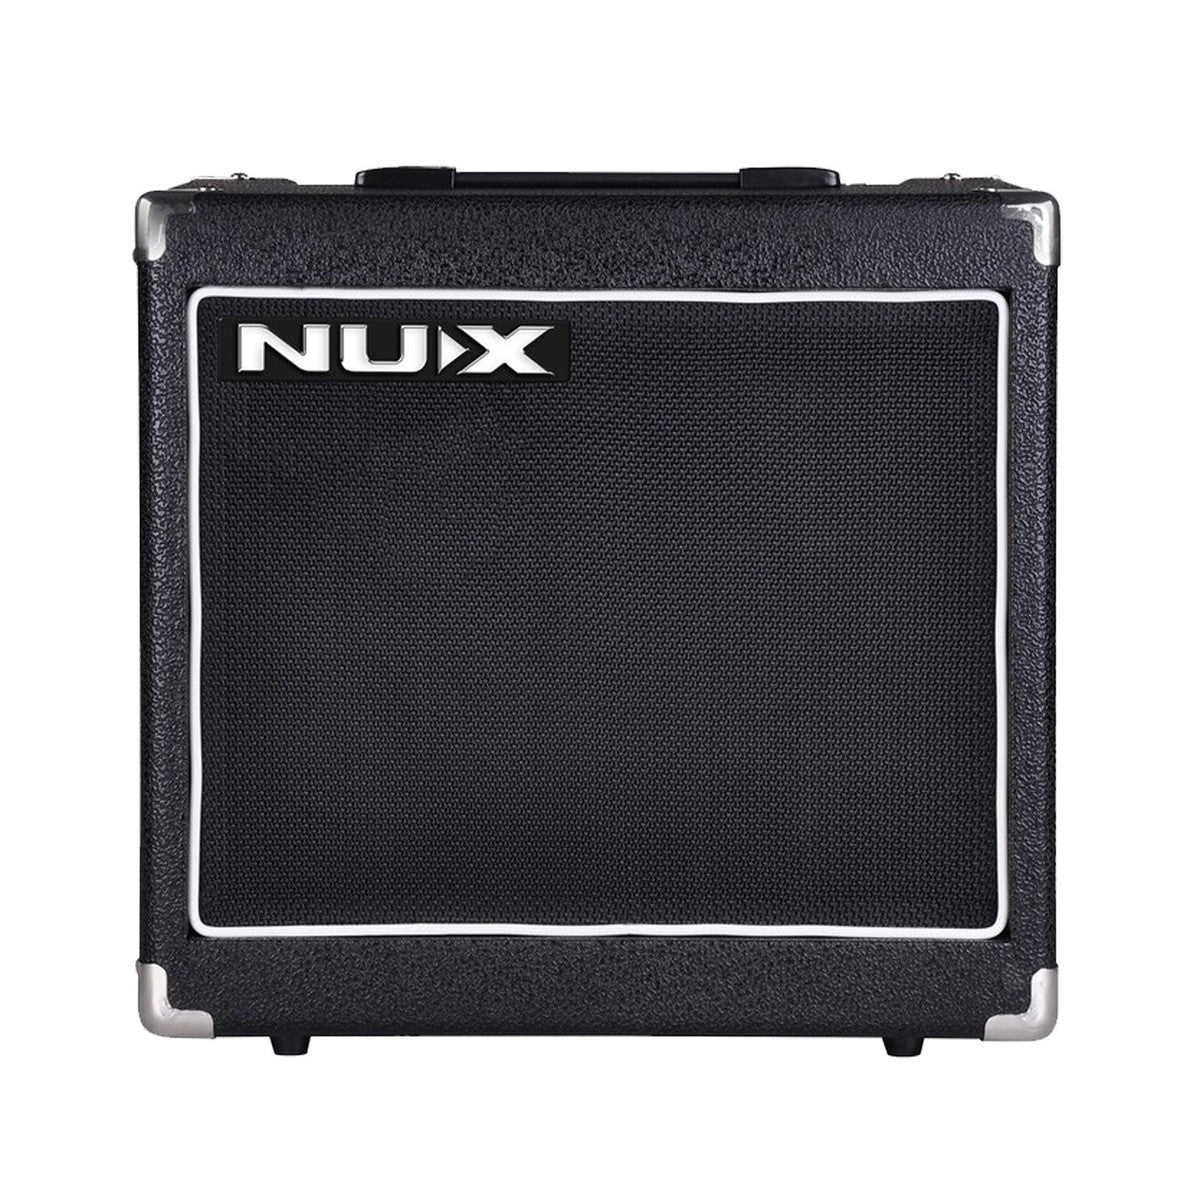 NUX MIGHTY DIGITAL GUITAR AMPLIFIER 50 WATTS, NUX, GUITAR AMPLIFIER, nux-mighty-digital-guitar-amplifier-50-watts, ZOSO MUSIC SDN BHD